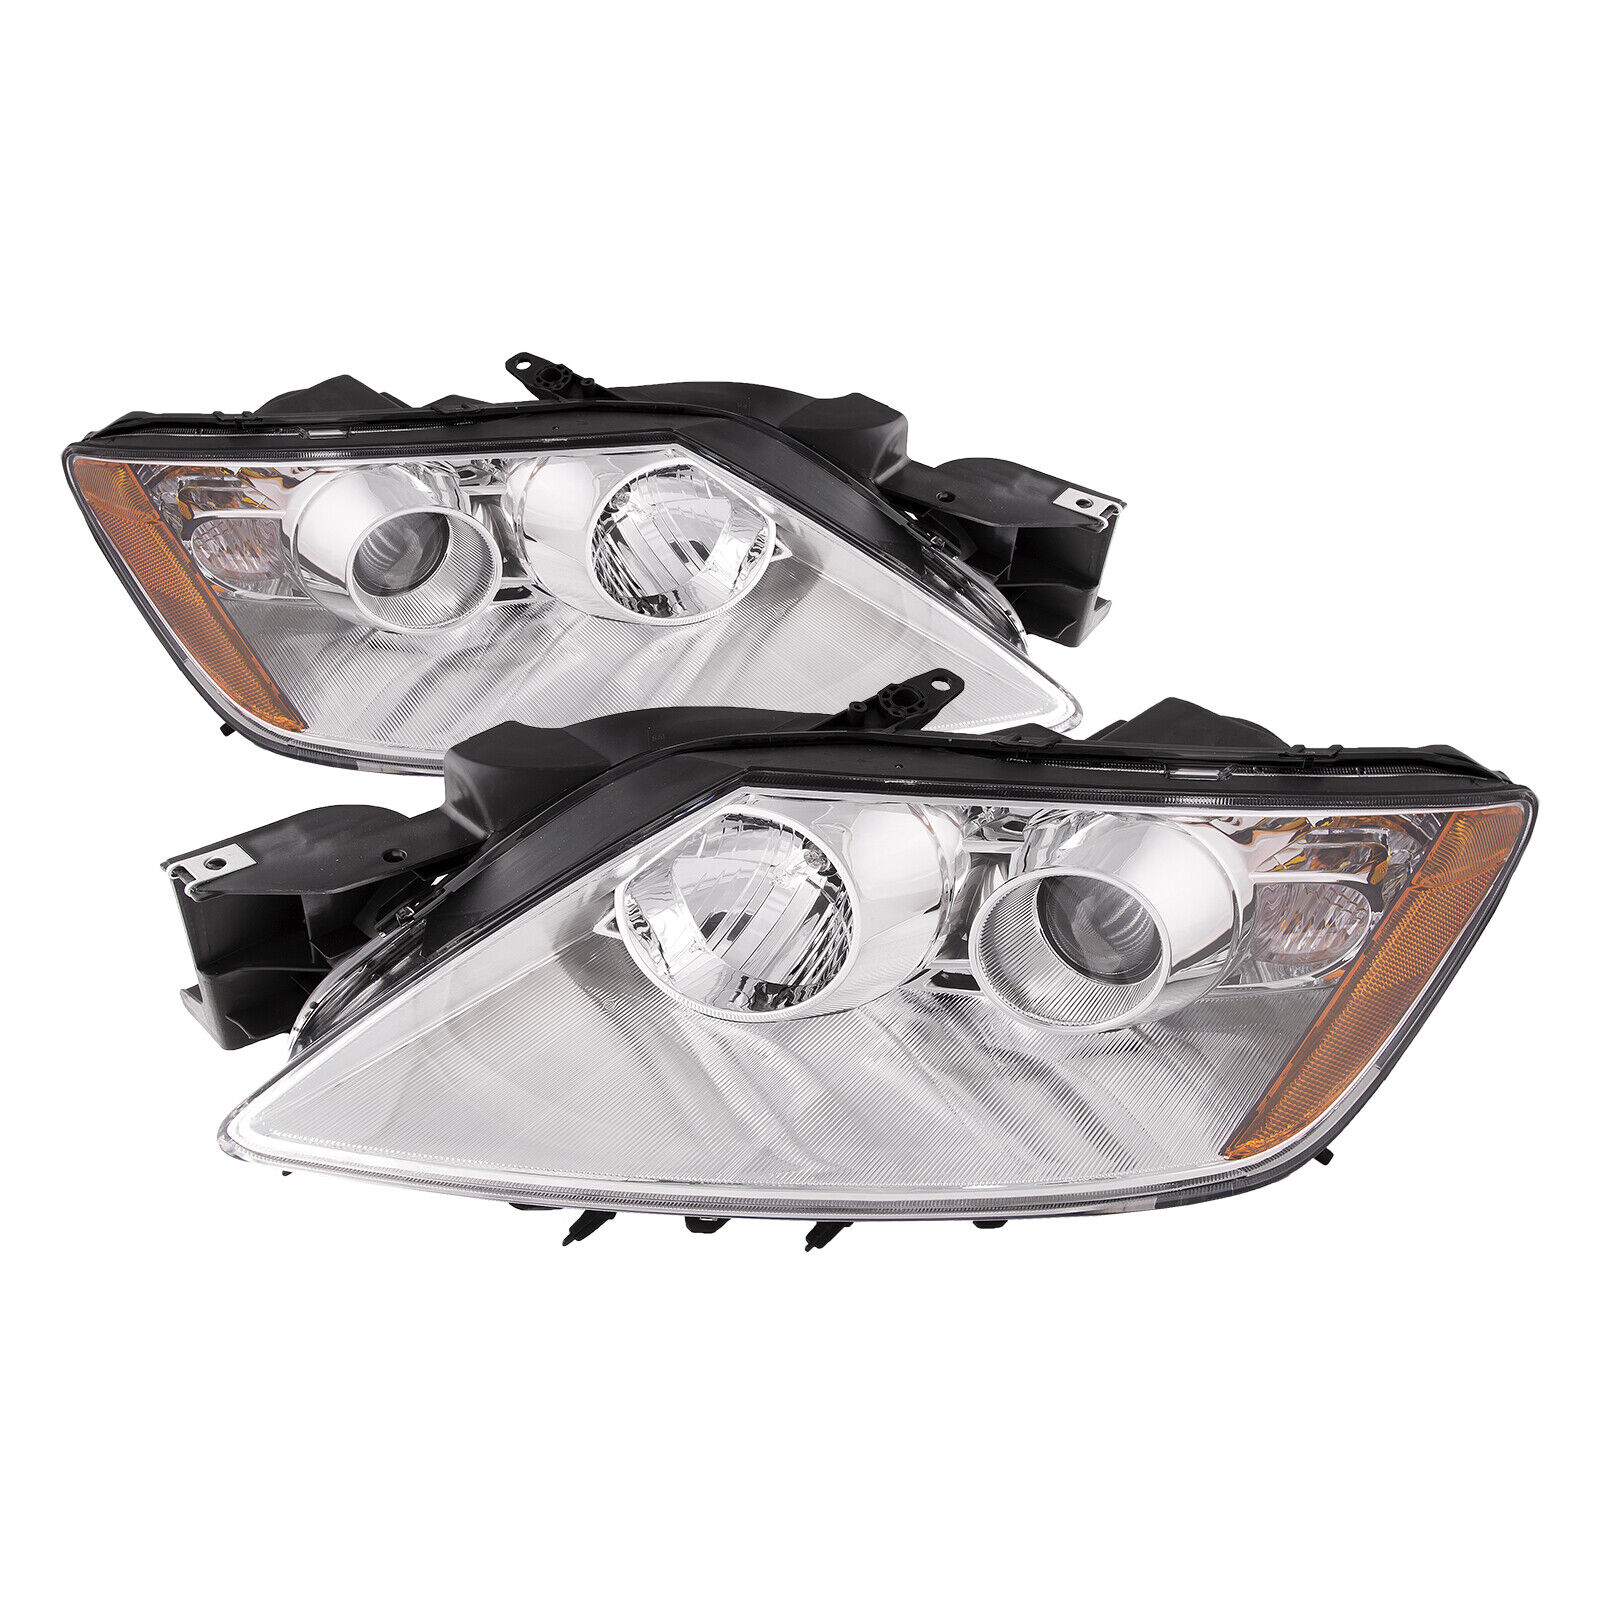 PERDE Chrome Projector Headlight Set For 2007-2011 Mazda CX-7 Halogen Models